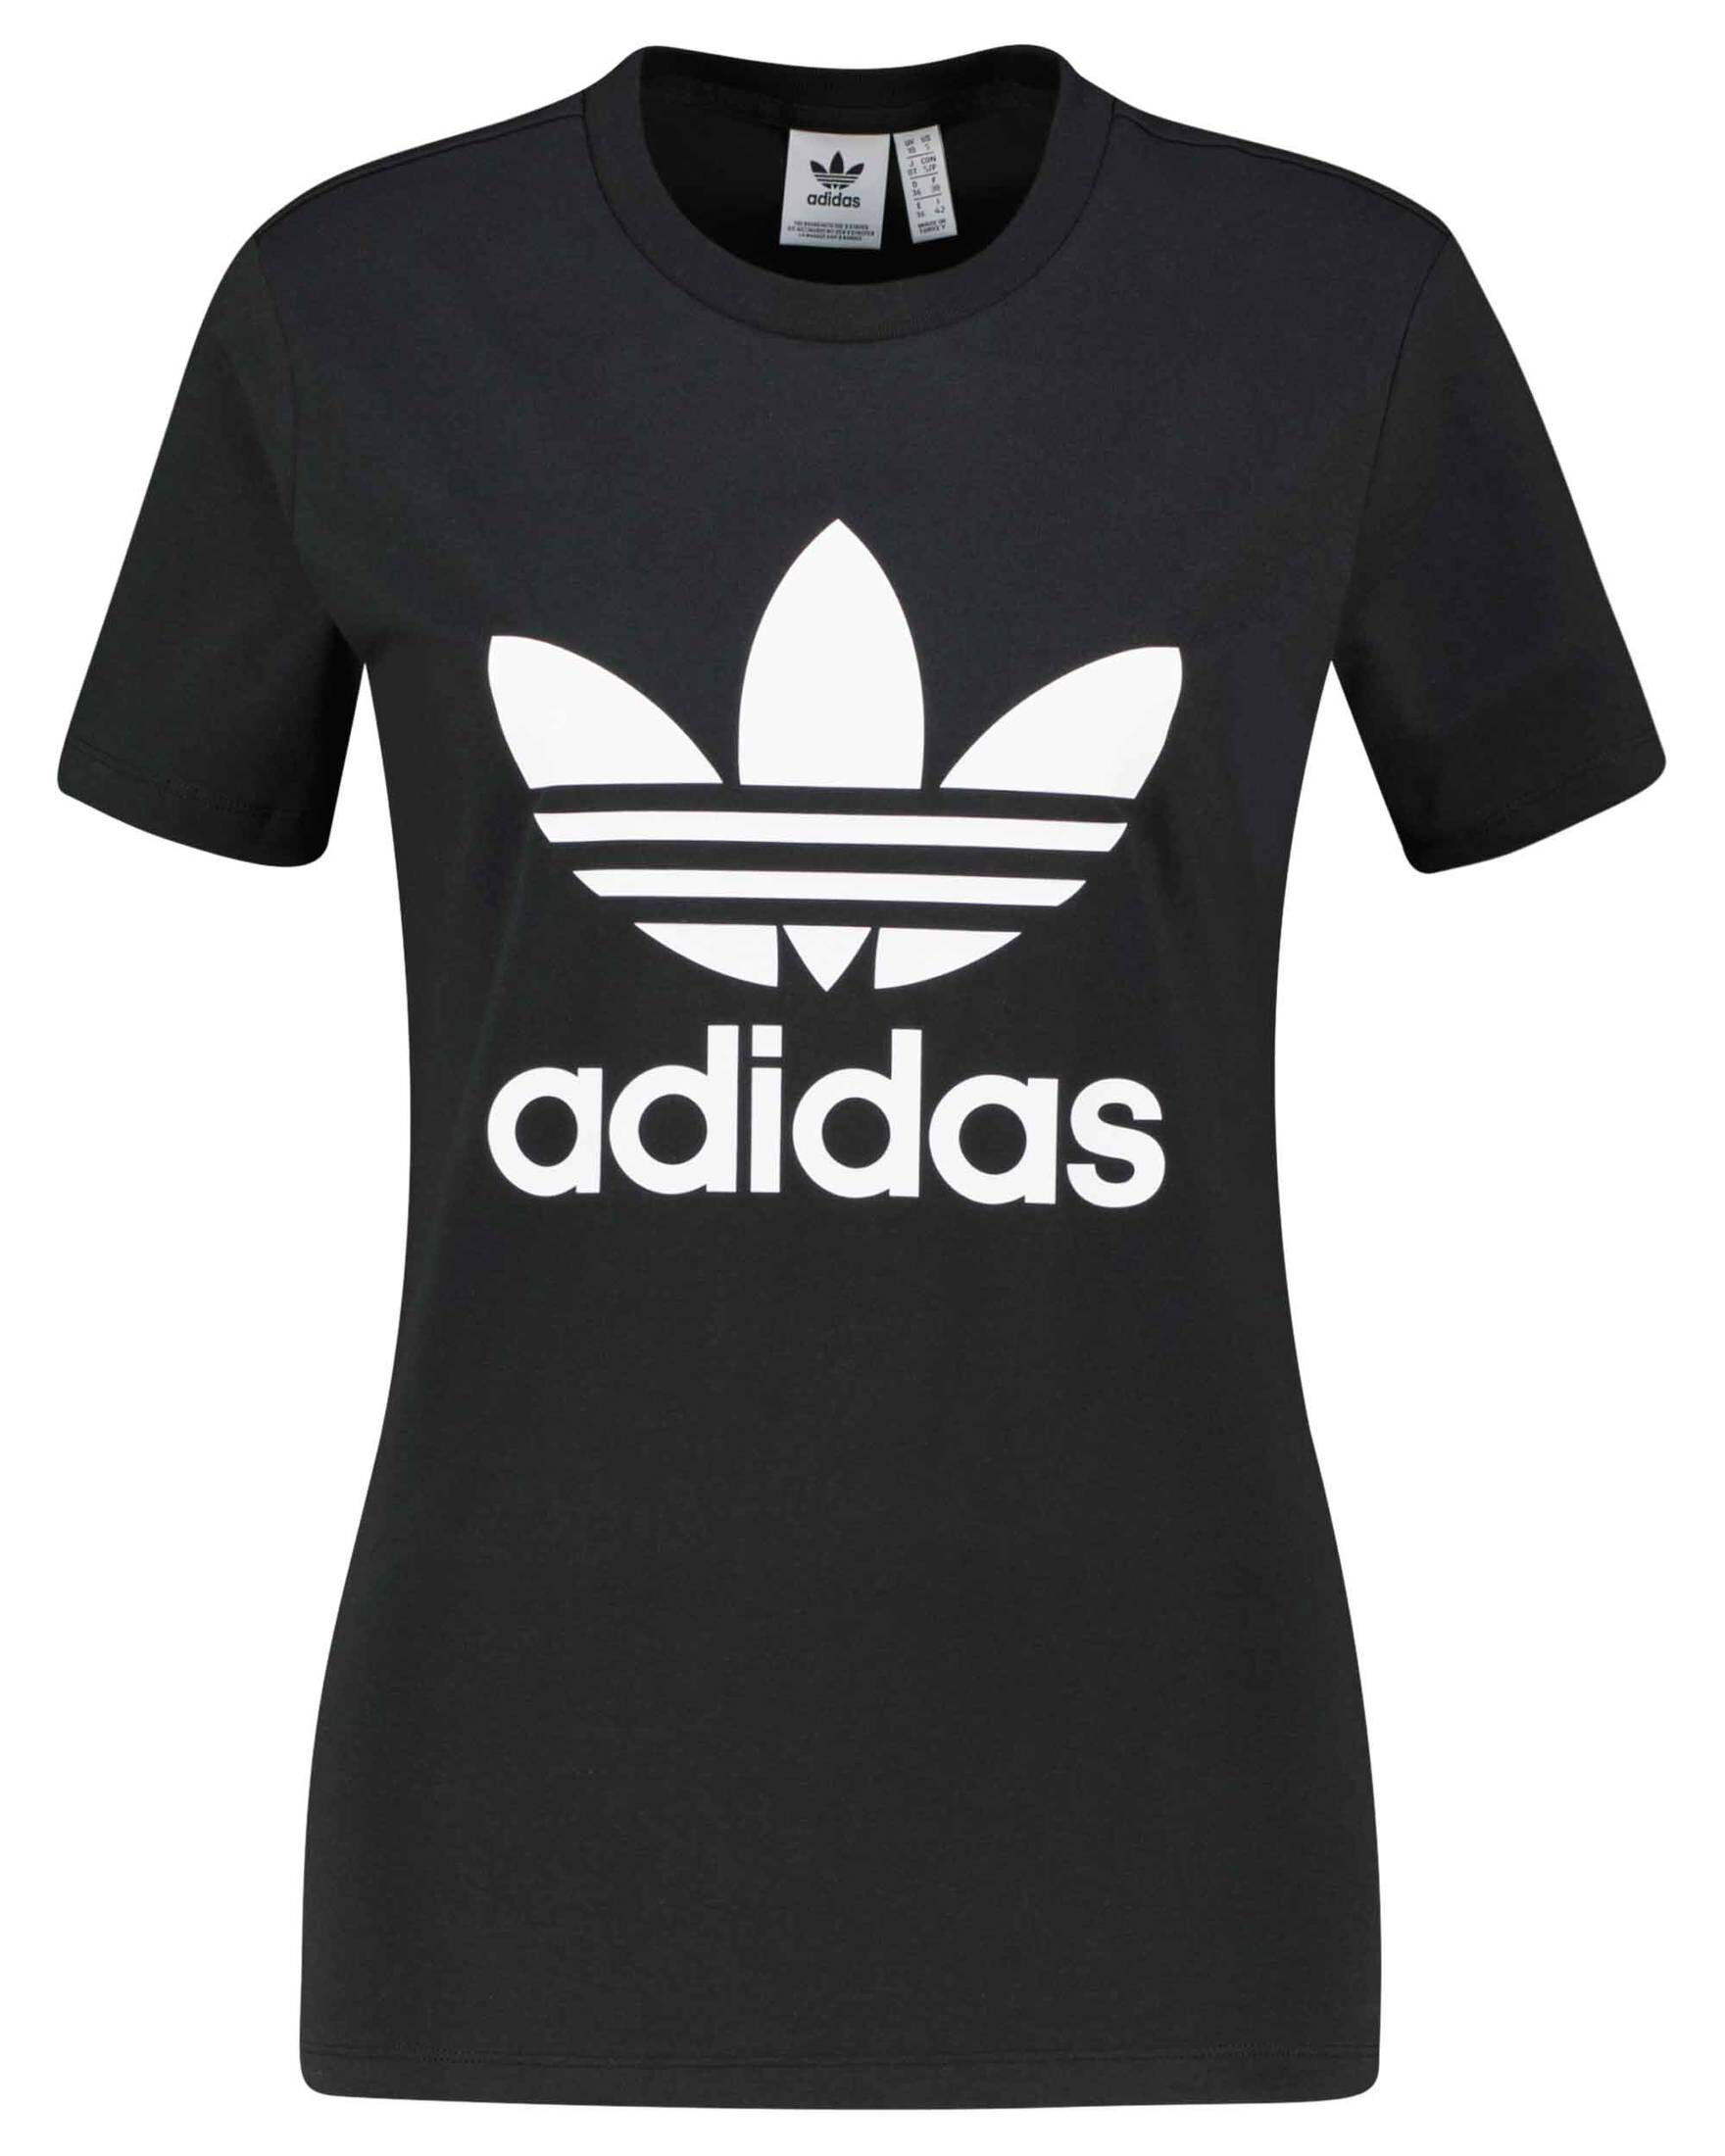 Gezamenlijk Taalkunde Verlenen adidas Performance Damen T-Shirt kaufen | engelhorn